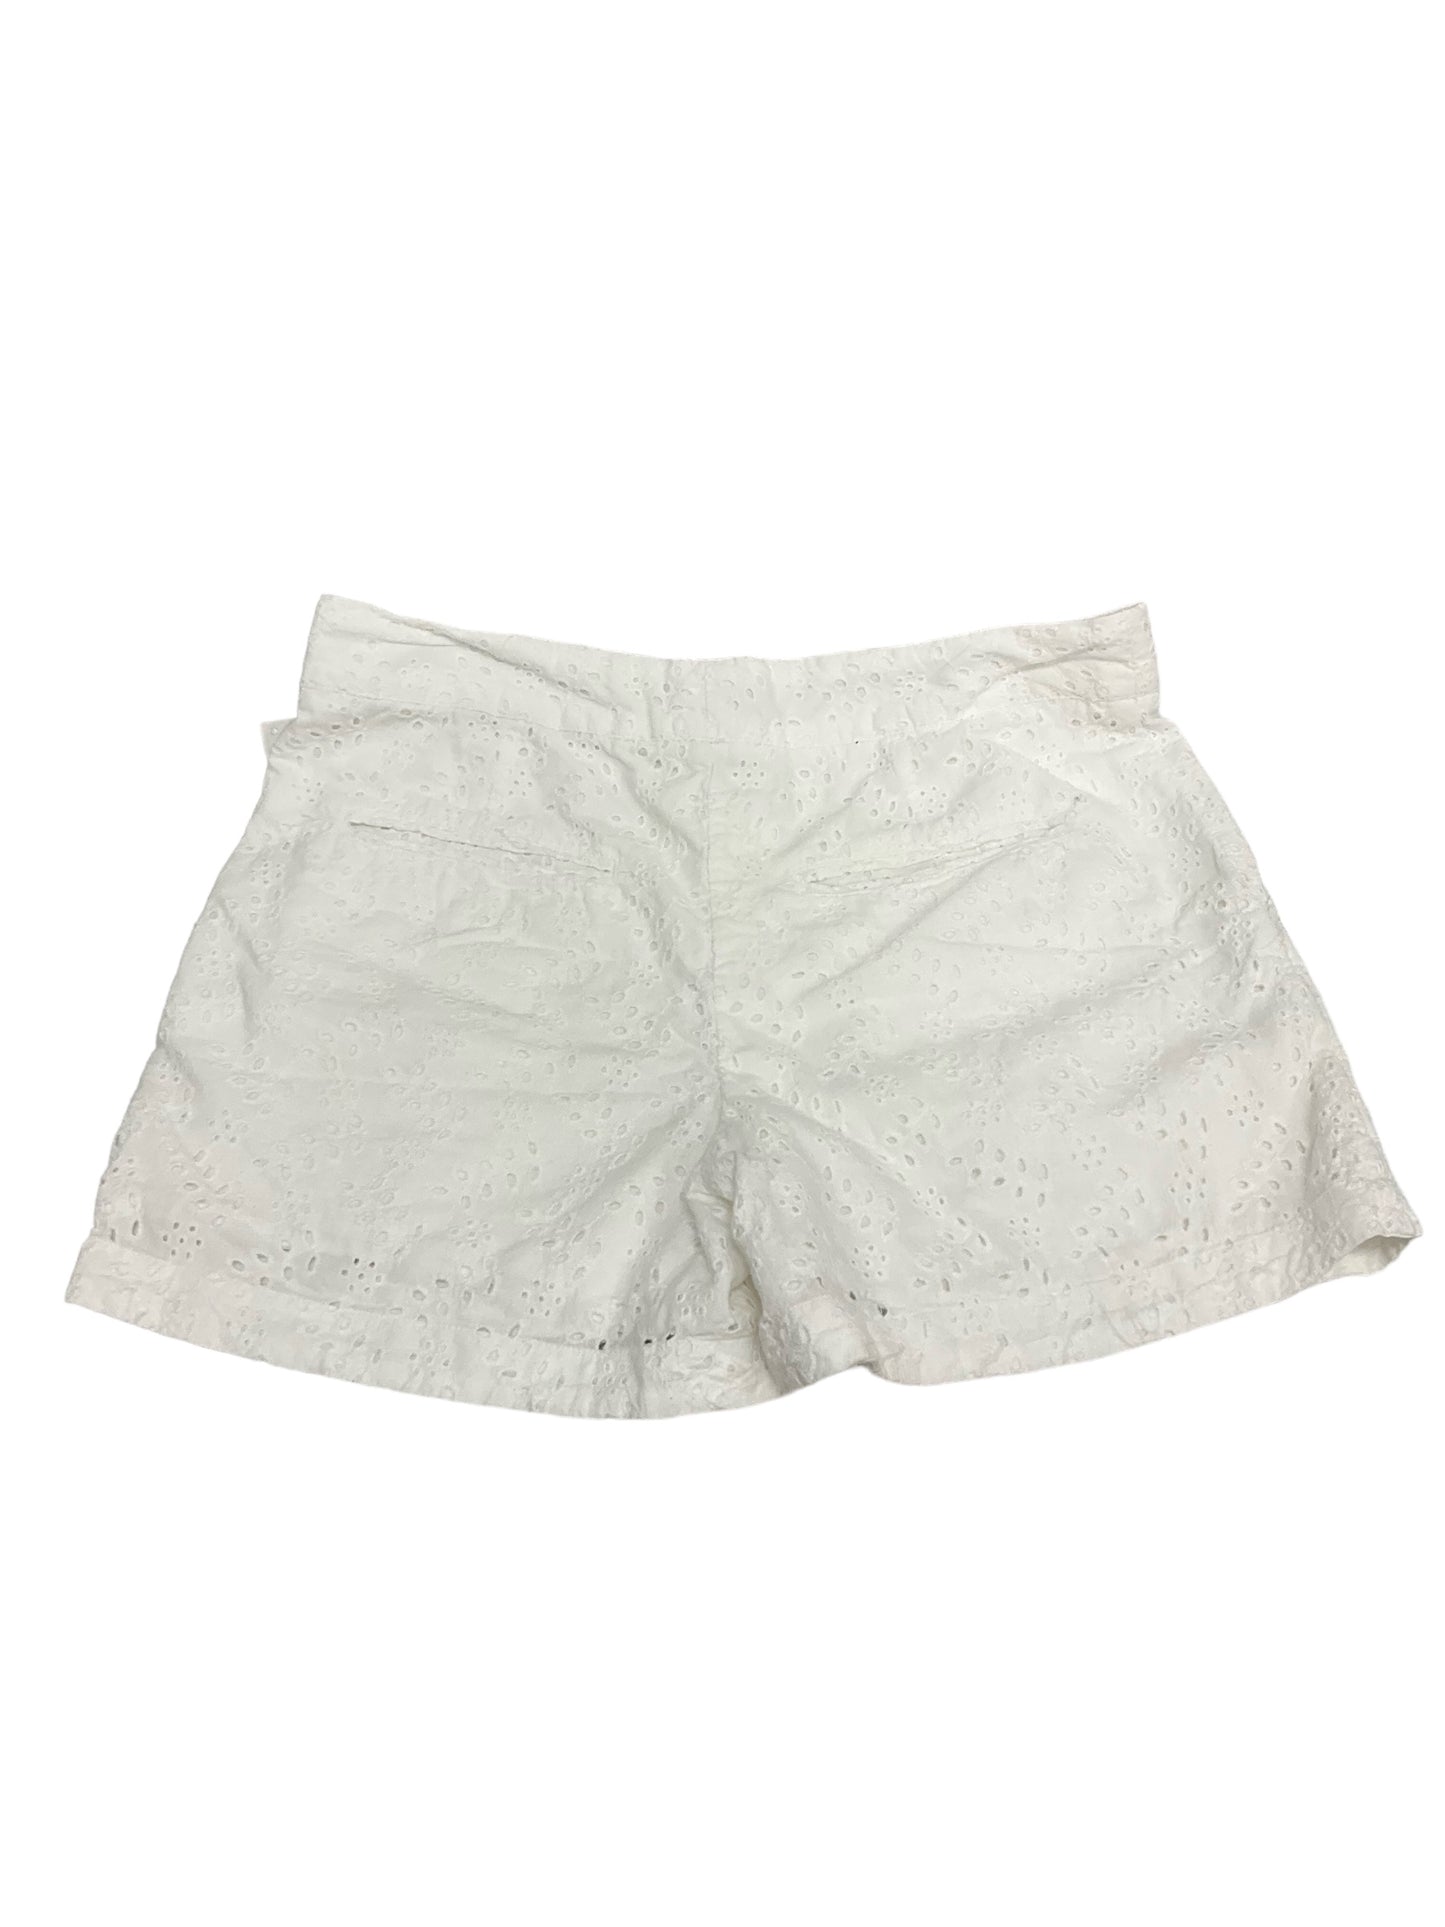 Shorts By Cynthia Rowley  Size: 2